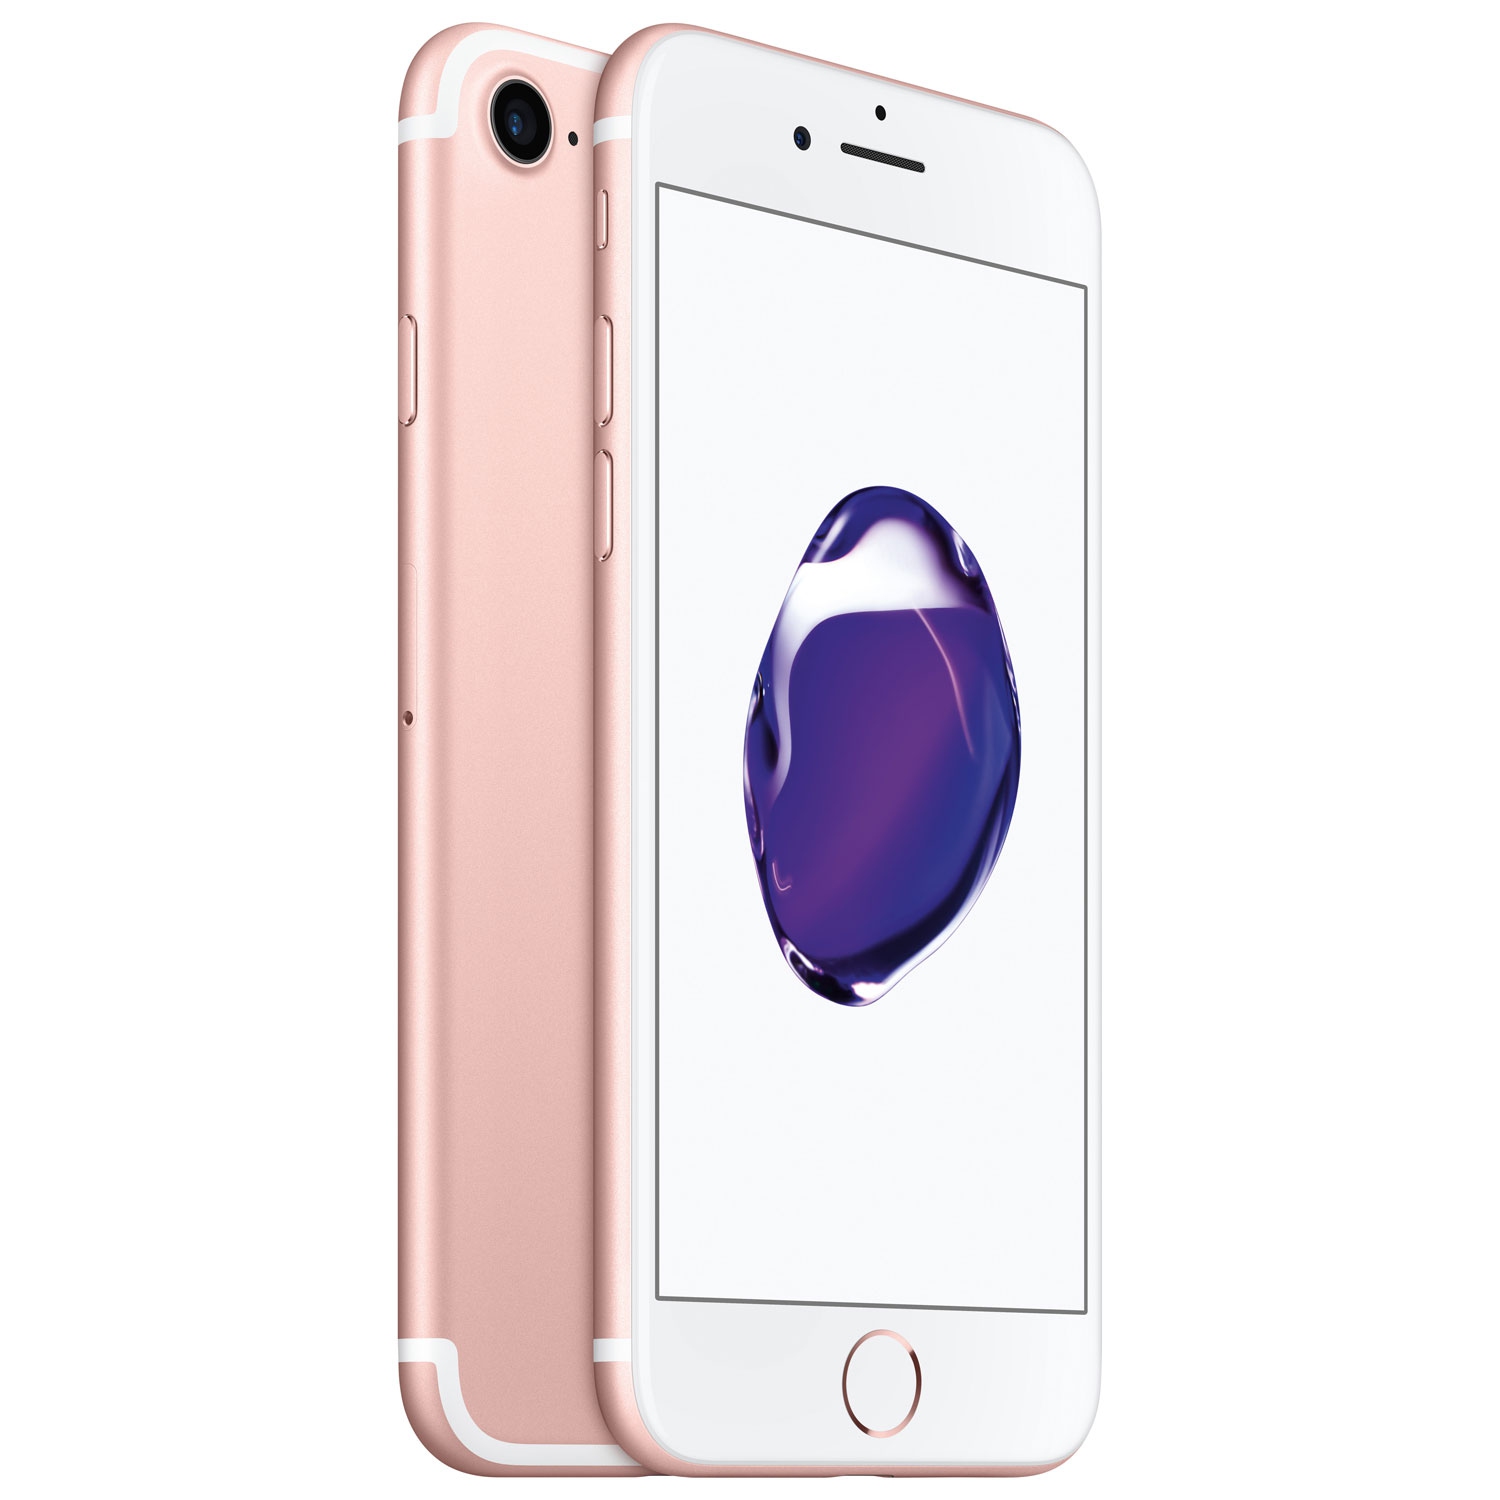 Refurbished (Excellent) - Apple iPhone 7 128GB Smartphone - Rose Gold - Unlocked - Certified Refurbished